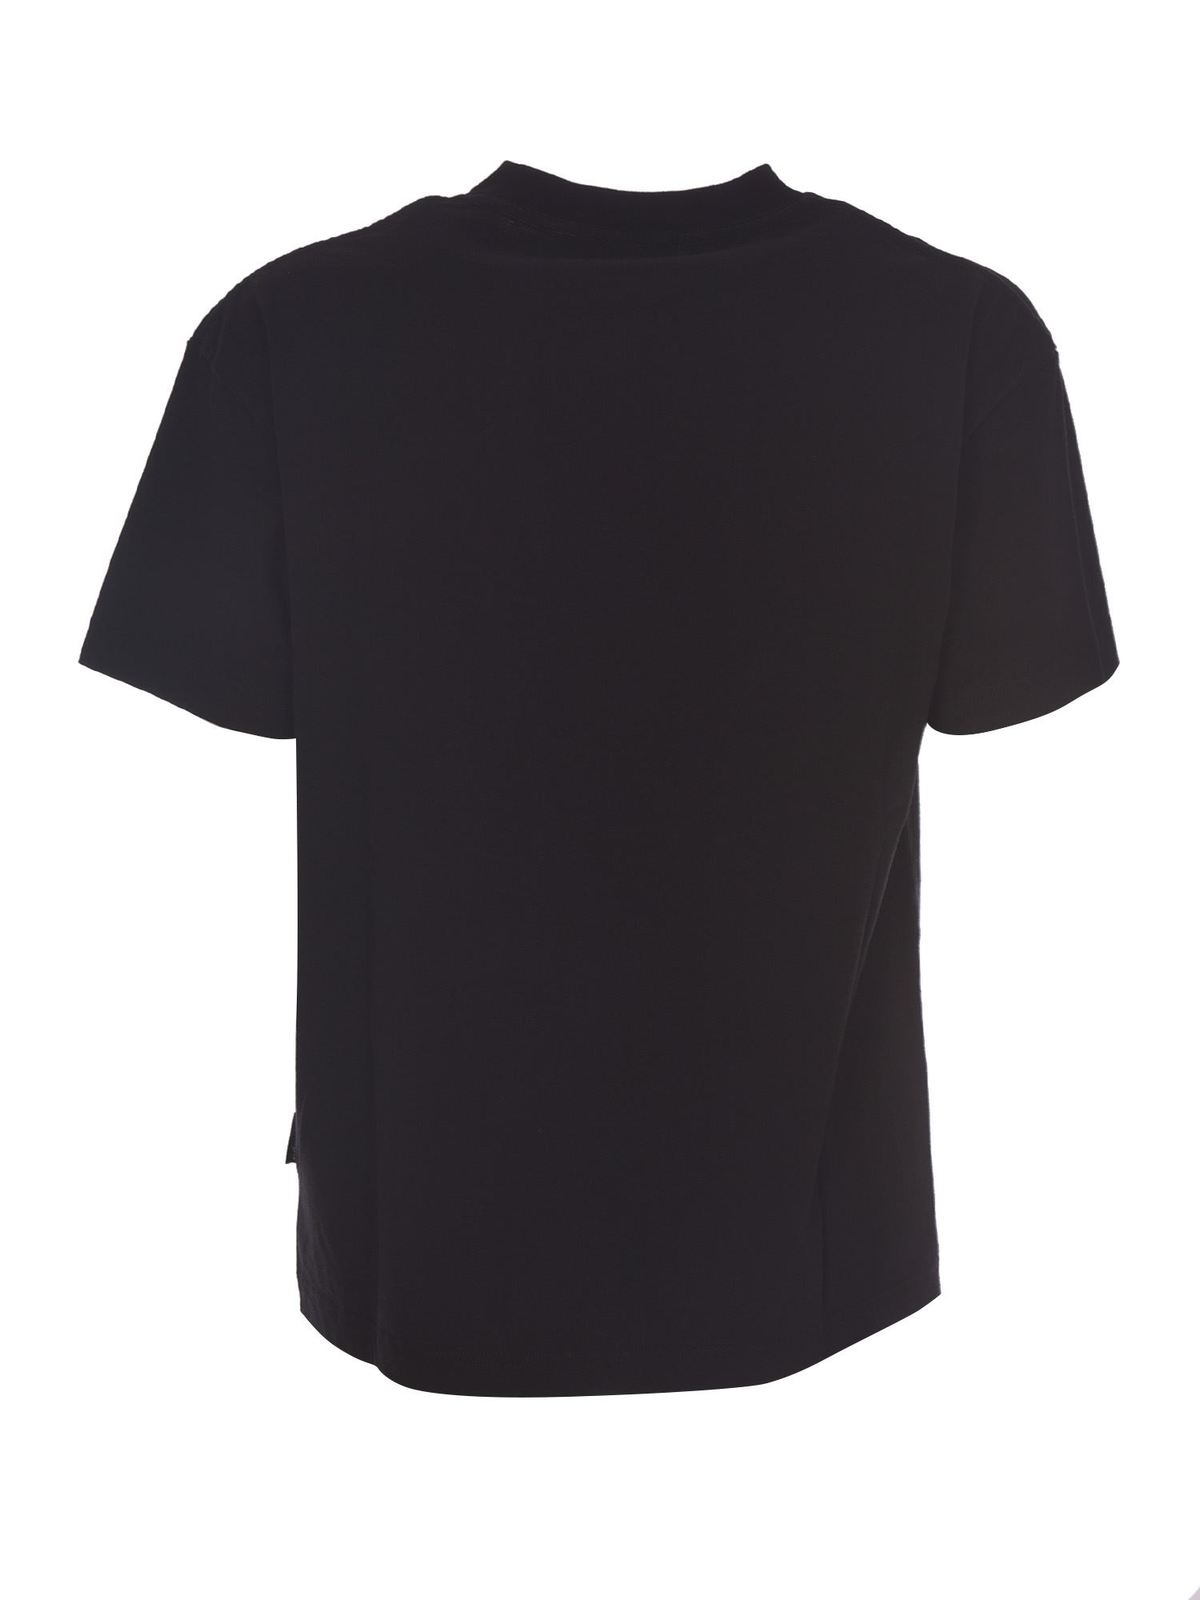 T-shirts Palm Angels - Juggler Pin Up t-shirt in black ...